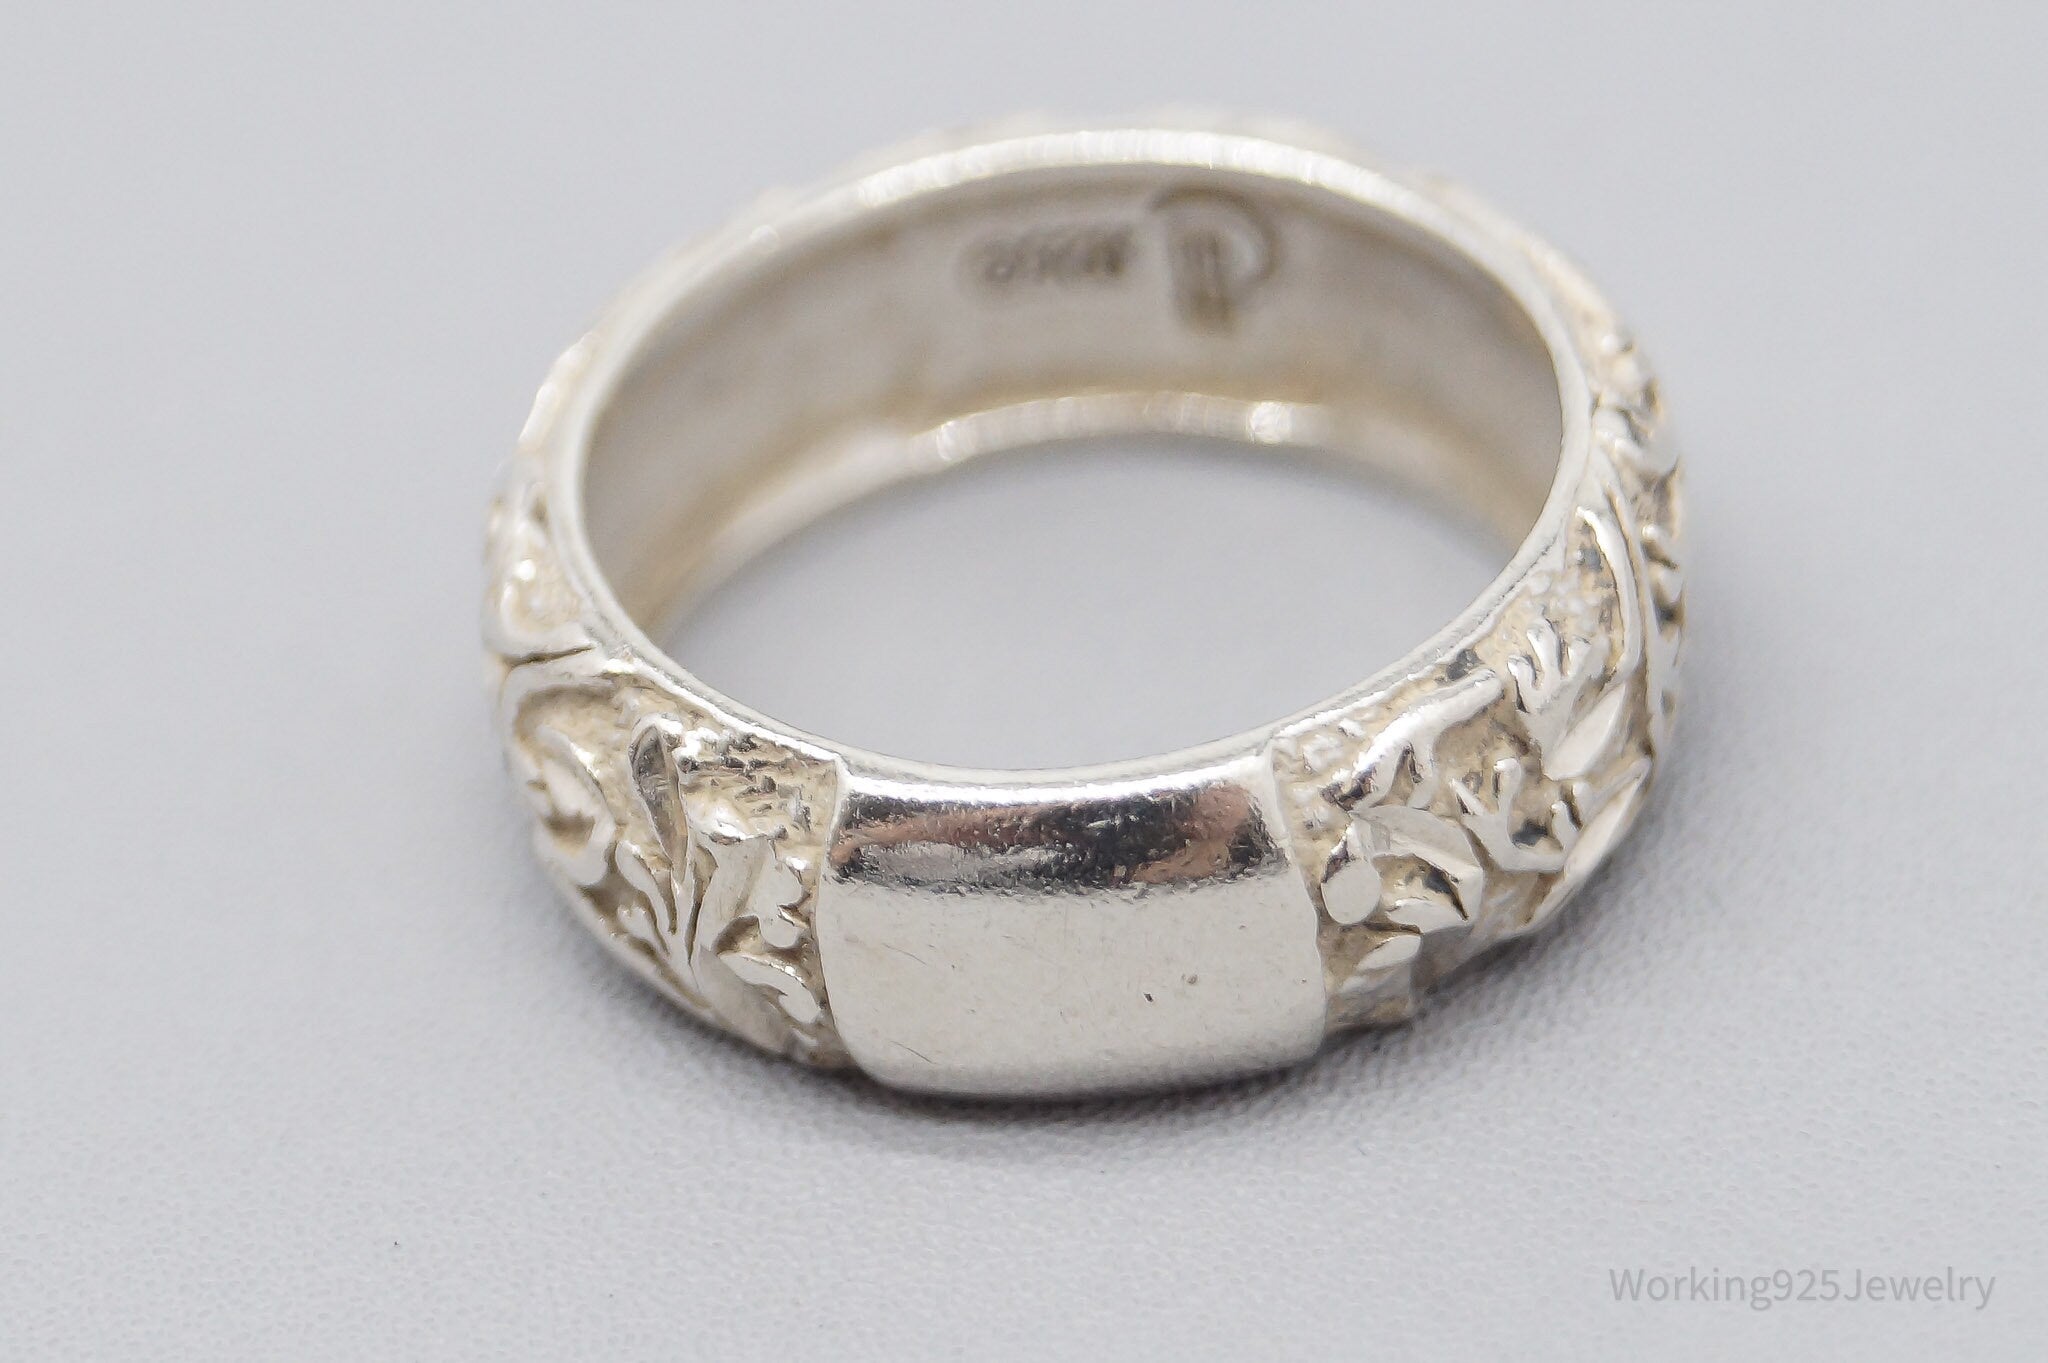 Vintage Native Designer Carolyn Pollack Relios Sterling Silver Ring - Size 6